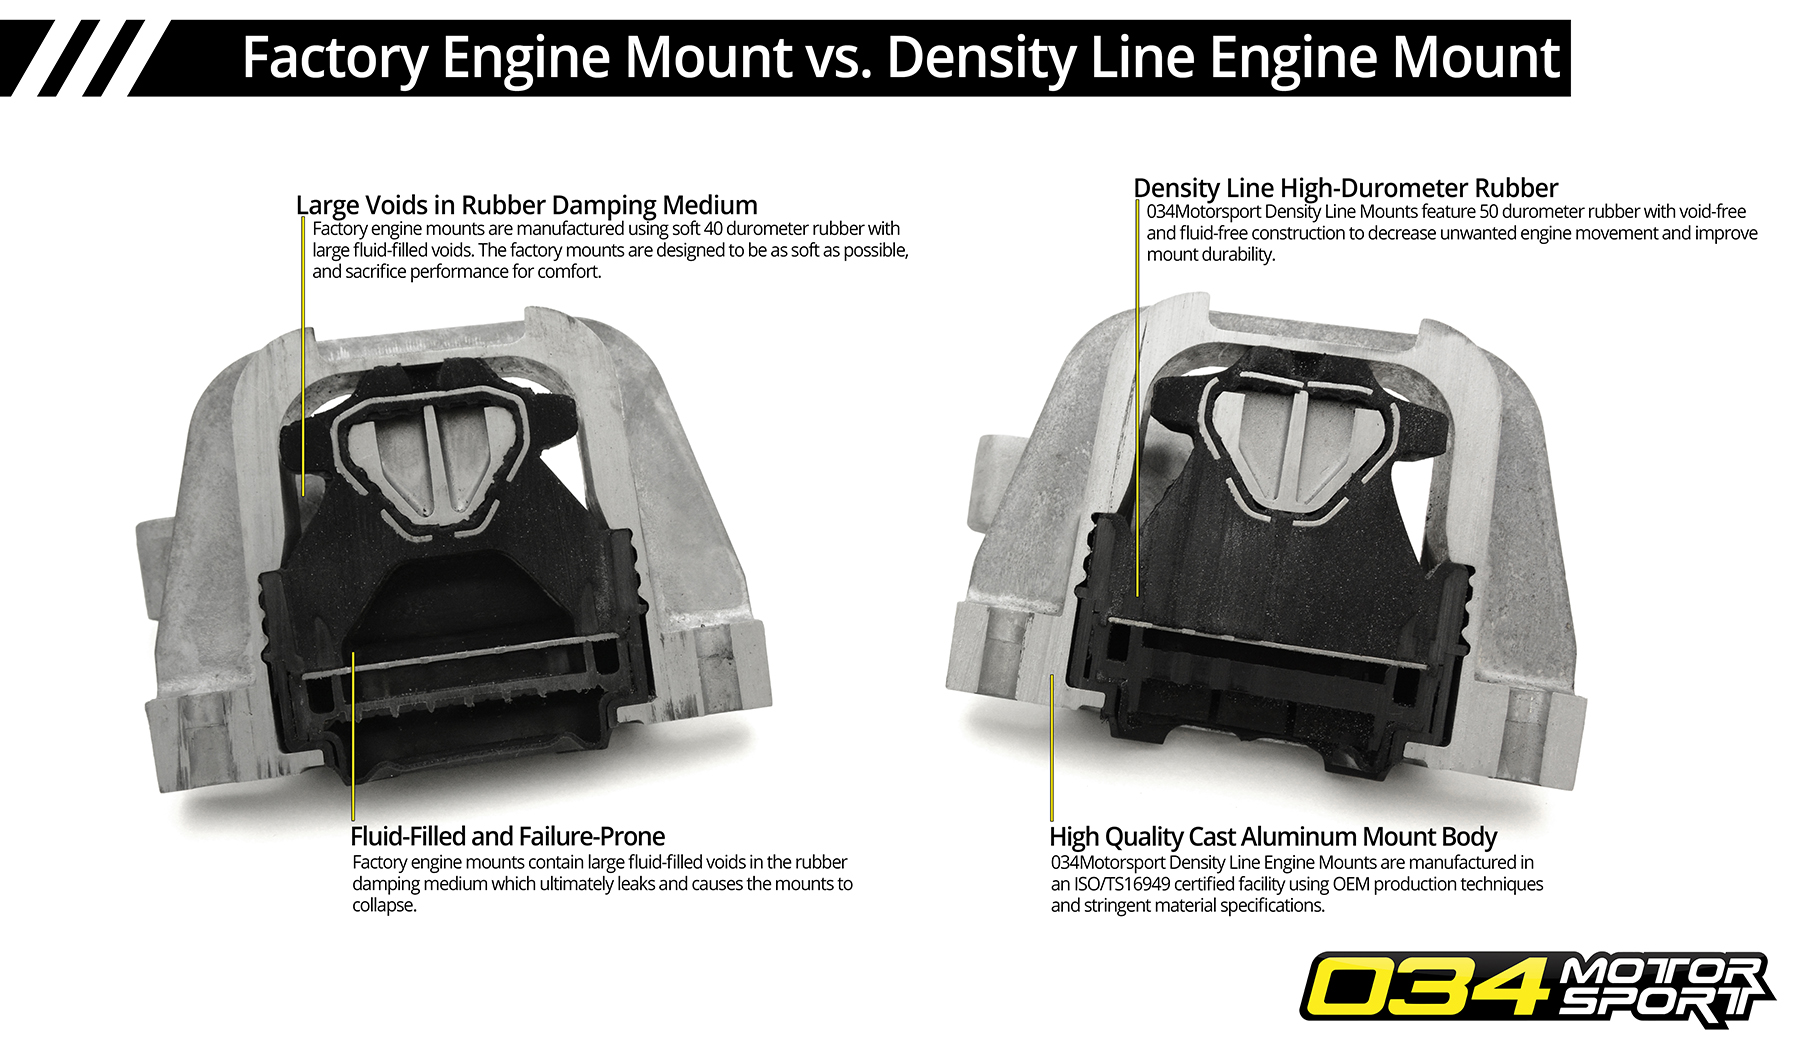 034Motorsport Density Line Performance Engine Mounts for MQB Audi/Volkswagen vs. Factory Mounts